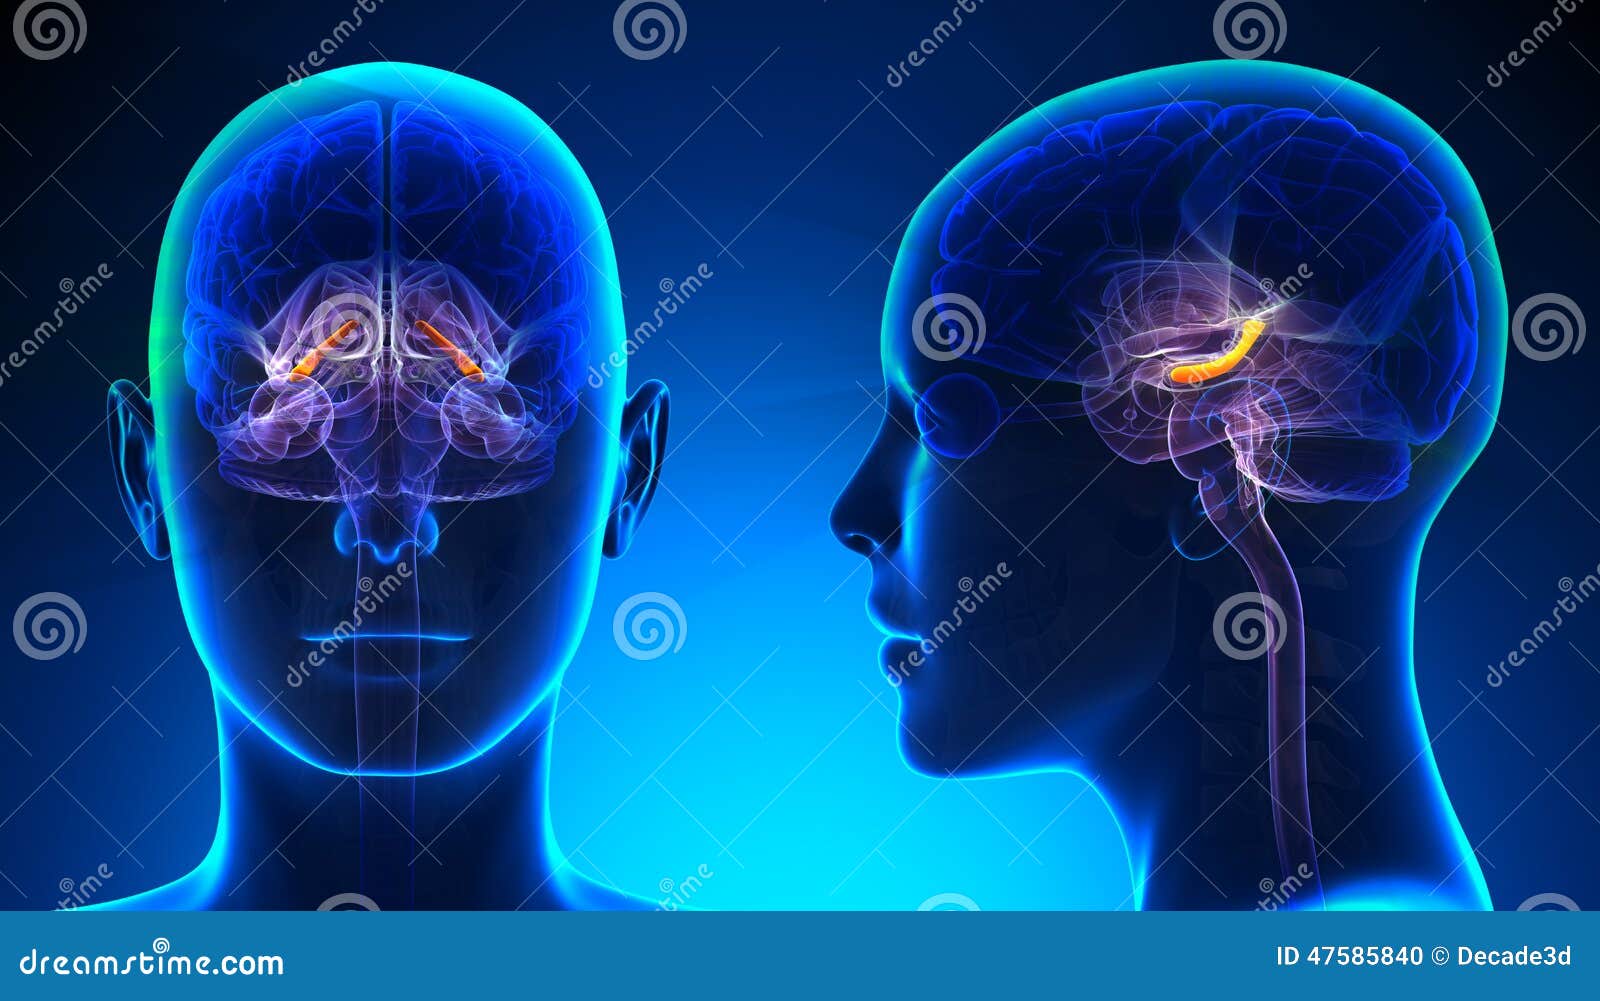 female hippocampus brain anatomy - blue concept